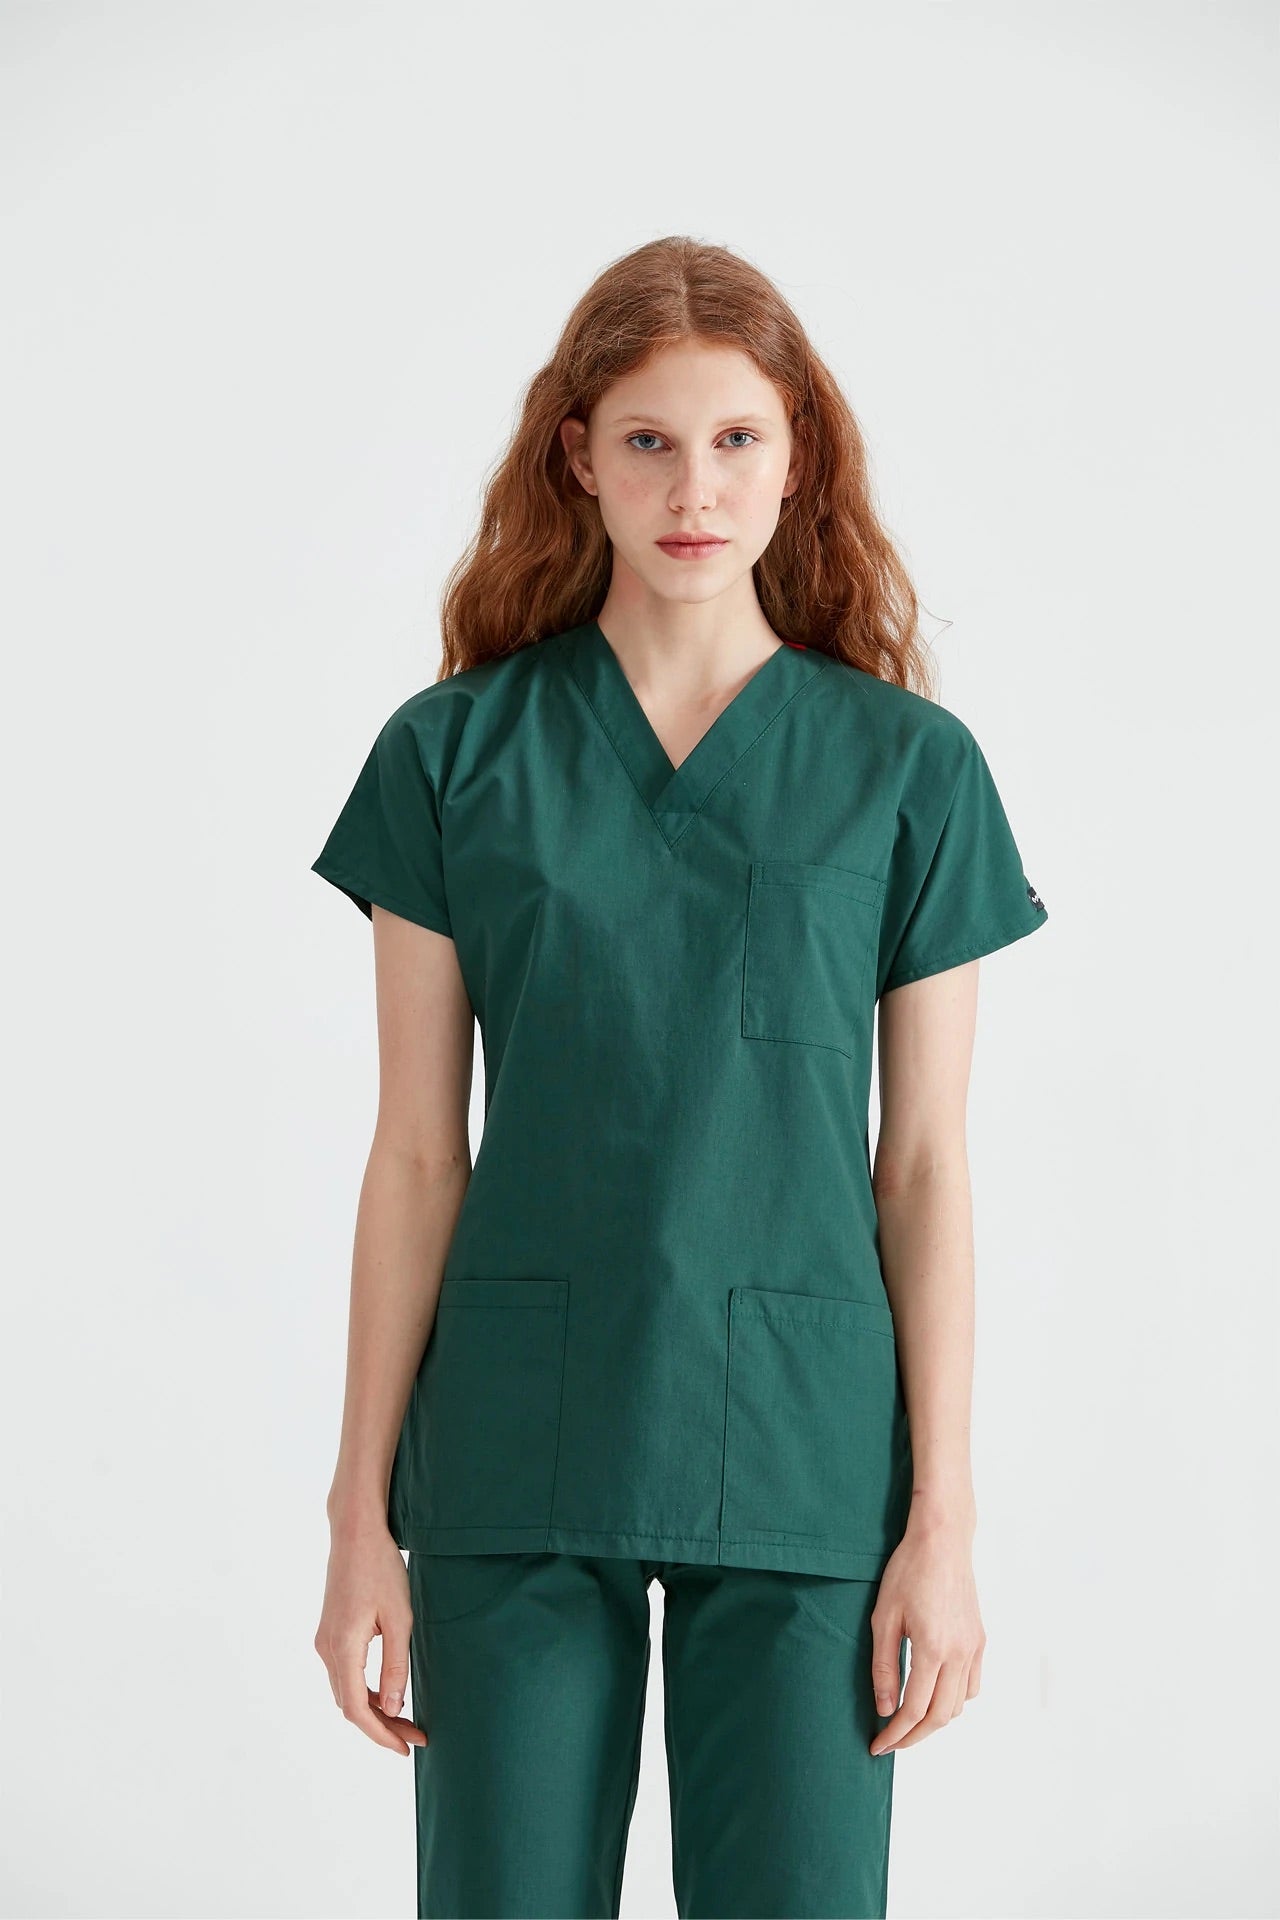 Khaki Green Medical Suit, For Women - Khaki - Classic Model